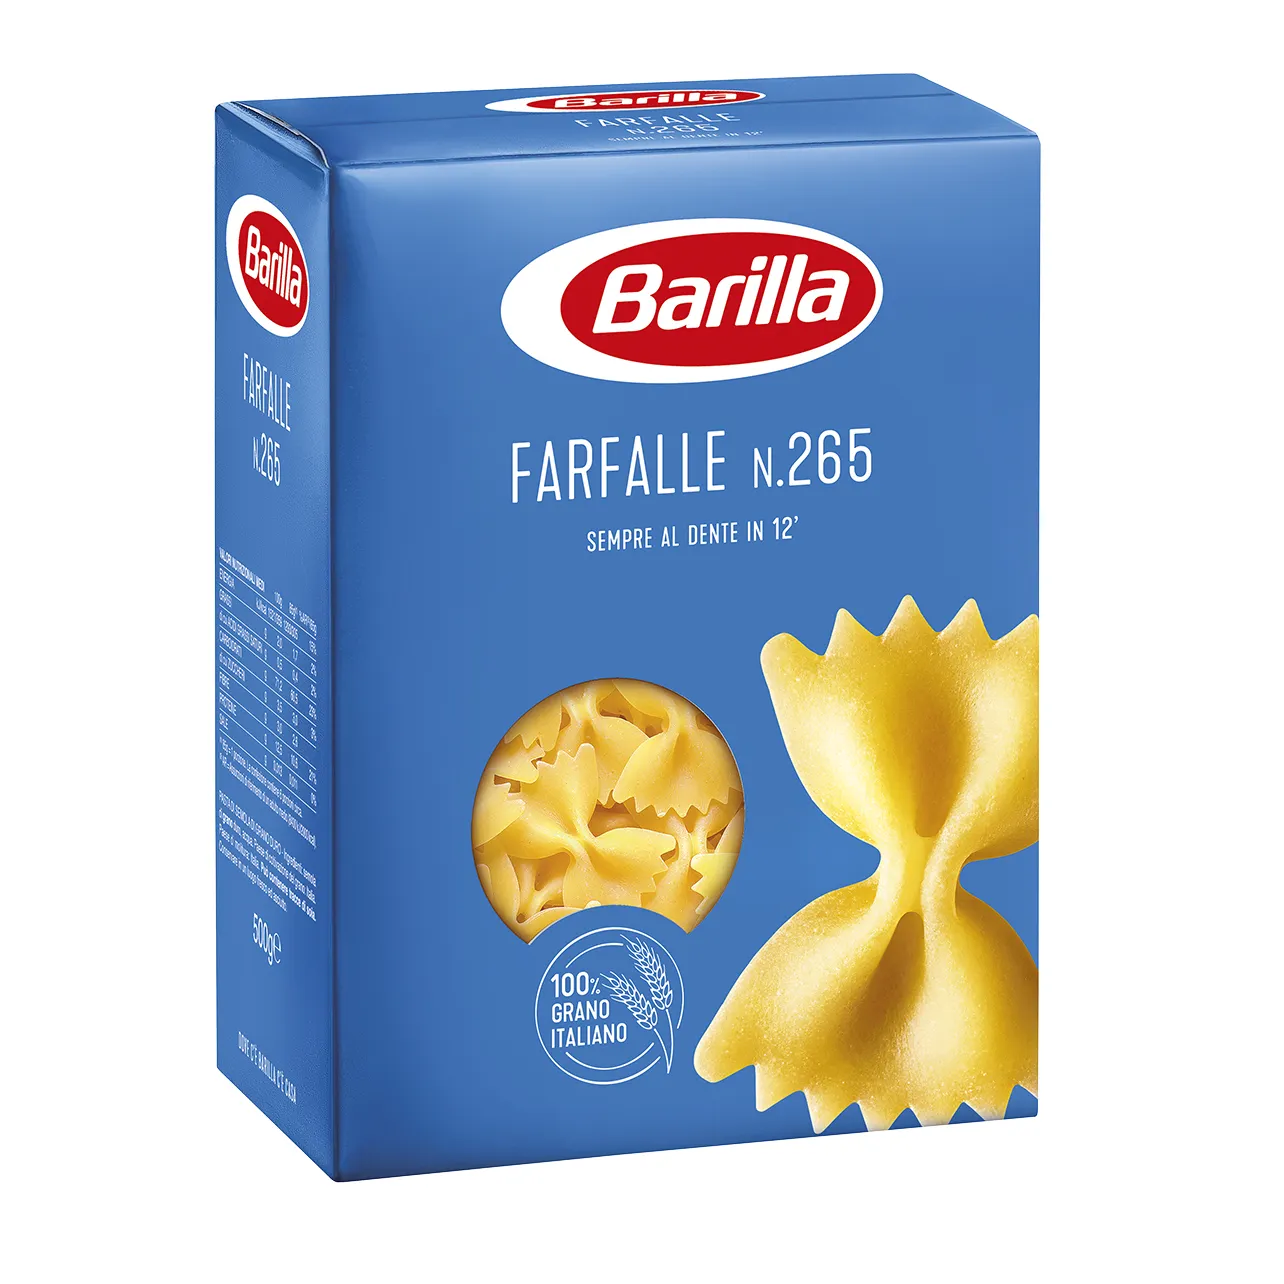 Butterfly Shape Durum Wheat Semolina Barilla Butterfly Pasta 500GX15 100% Italian Farfalle Pasta from Top Manufacturer